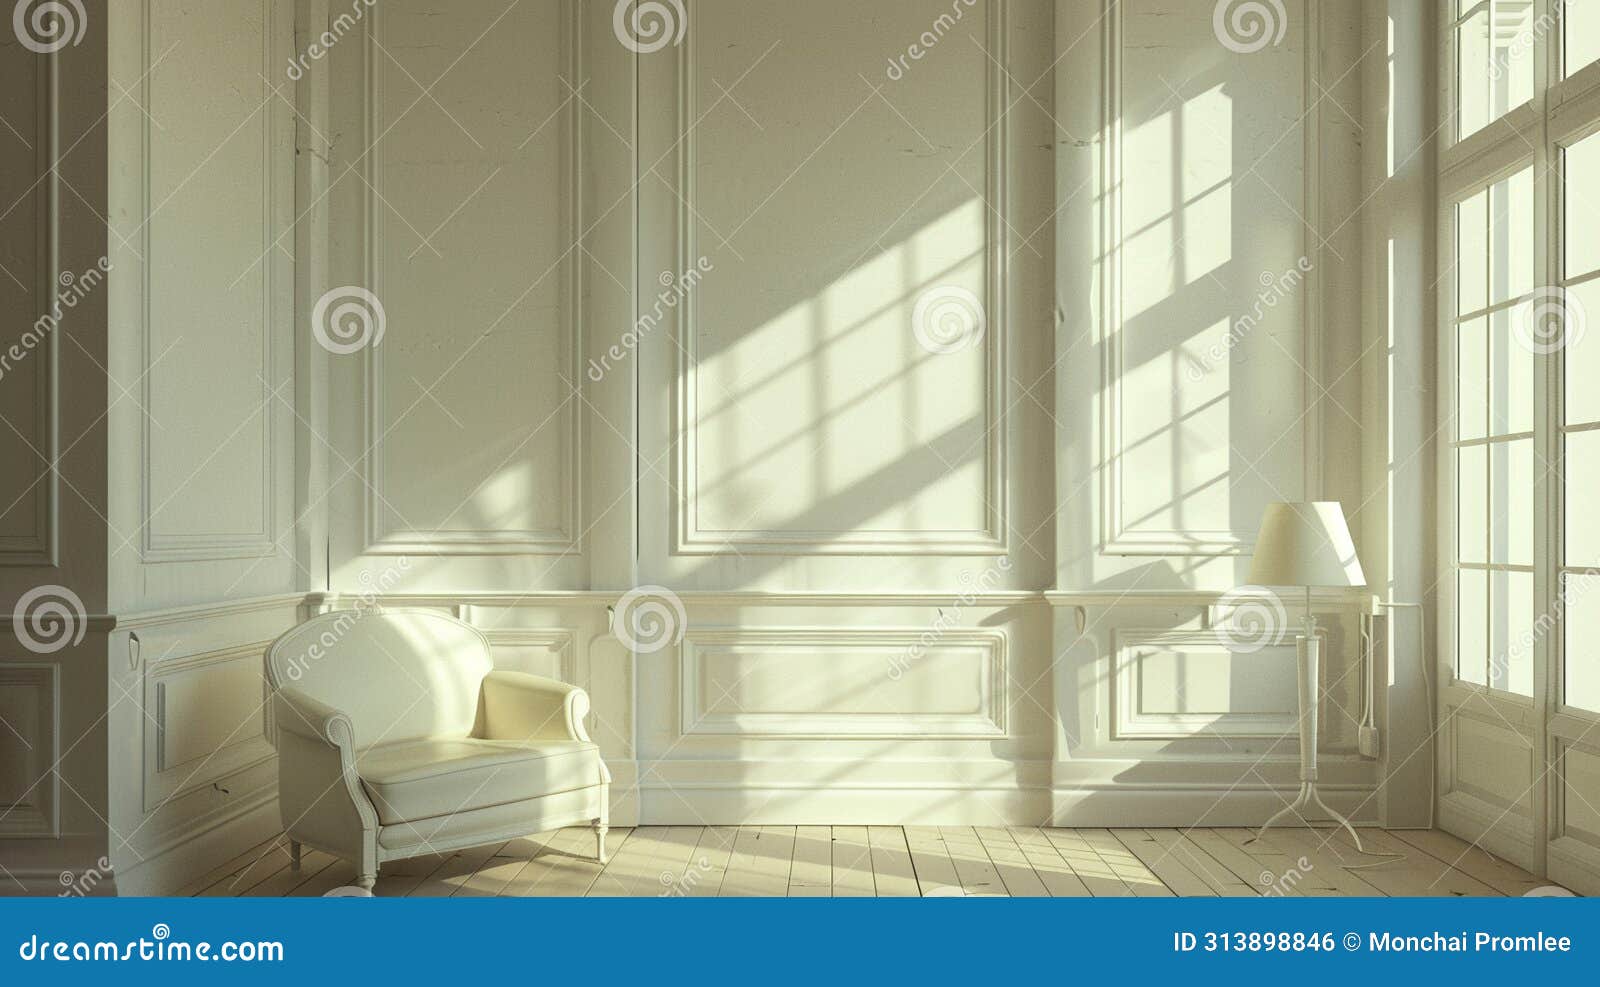 the room's monotone scheme, achieved with homogeneous paint, radiates a serene uniformity